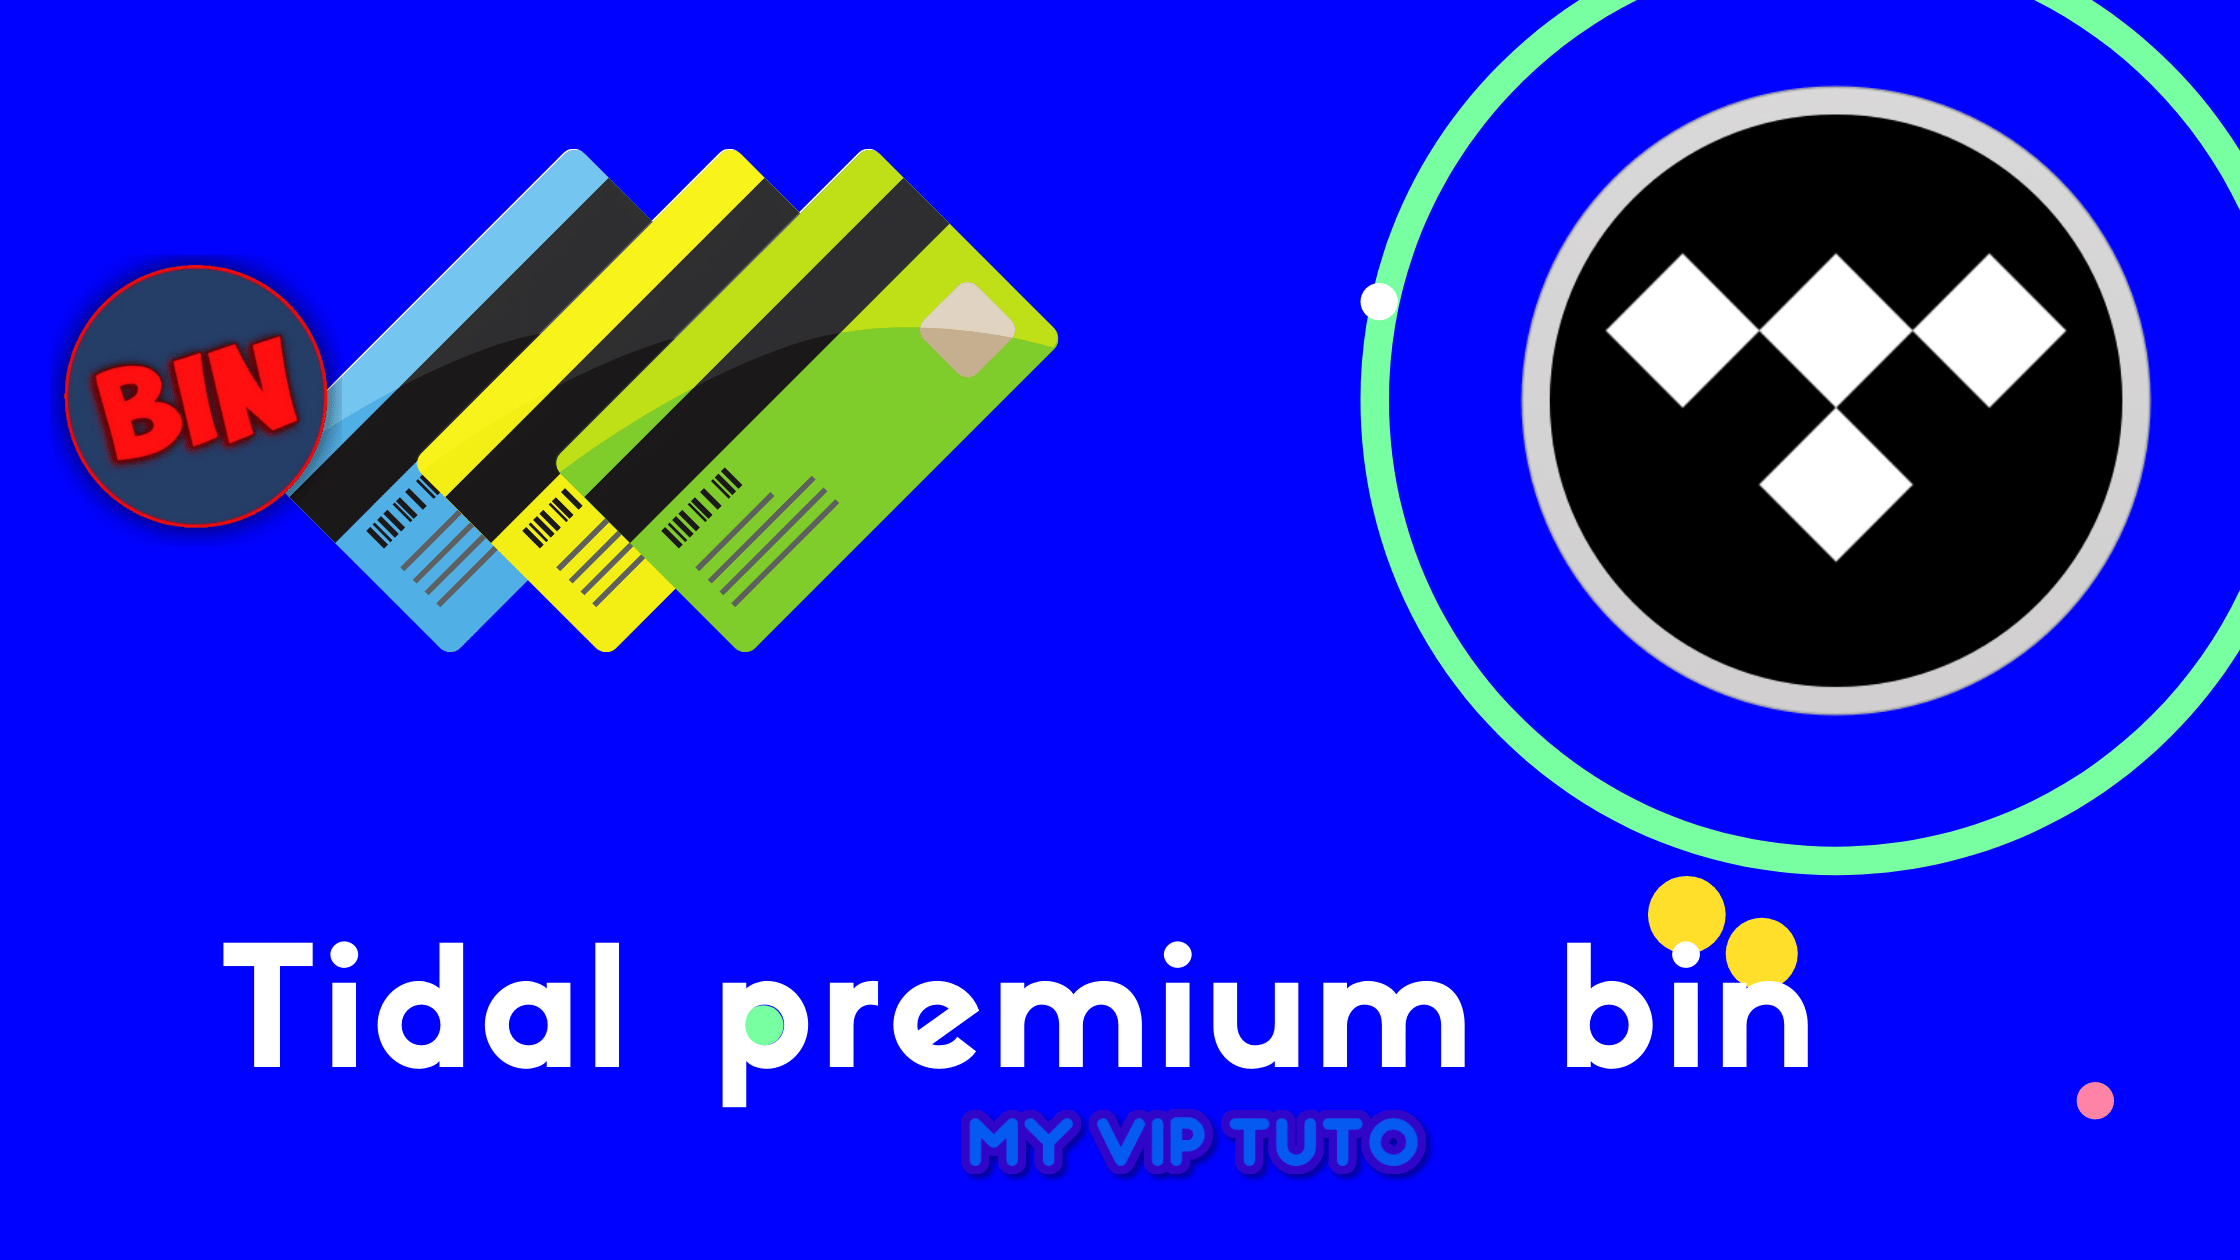 Tidal Premium bin 2020